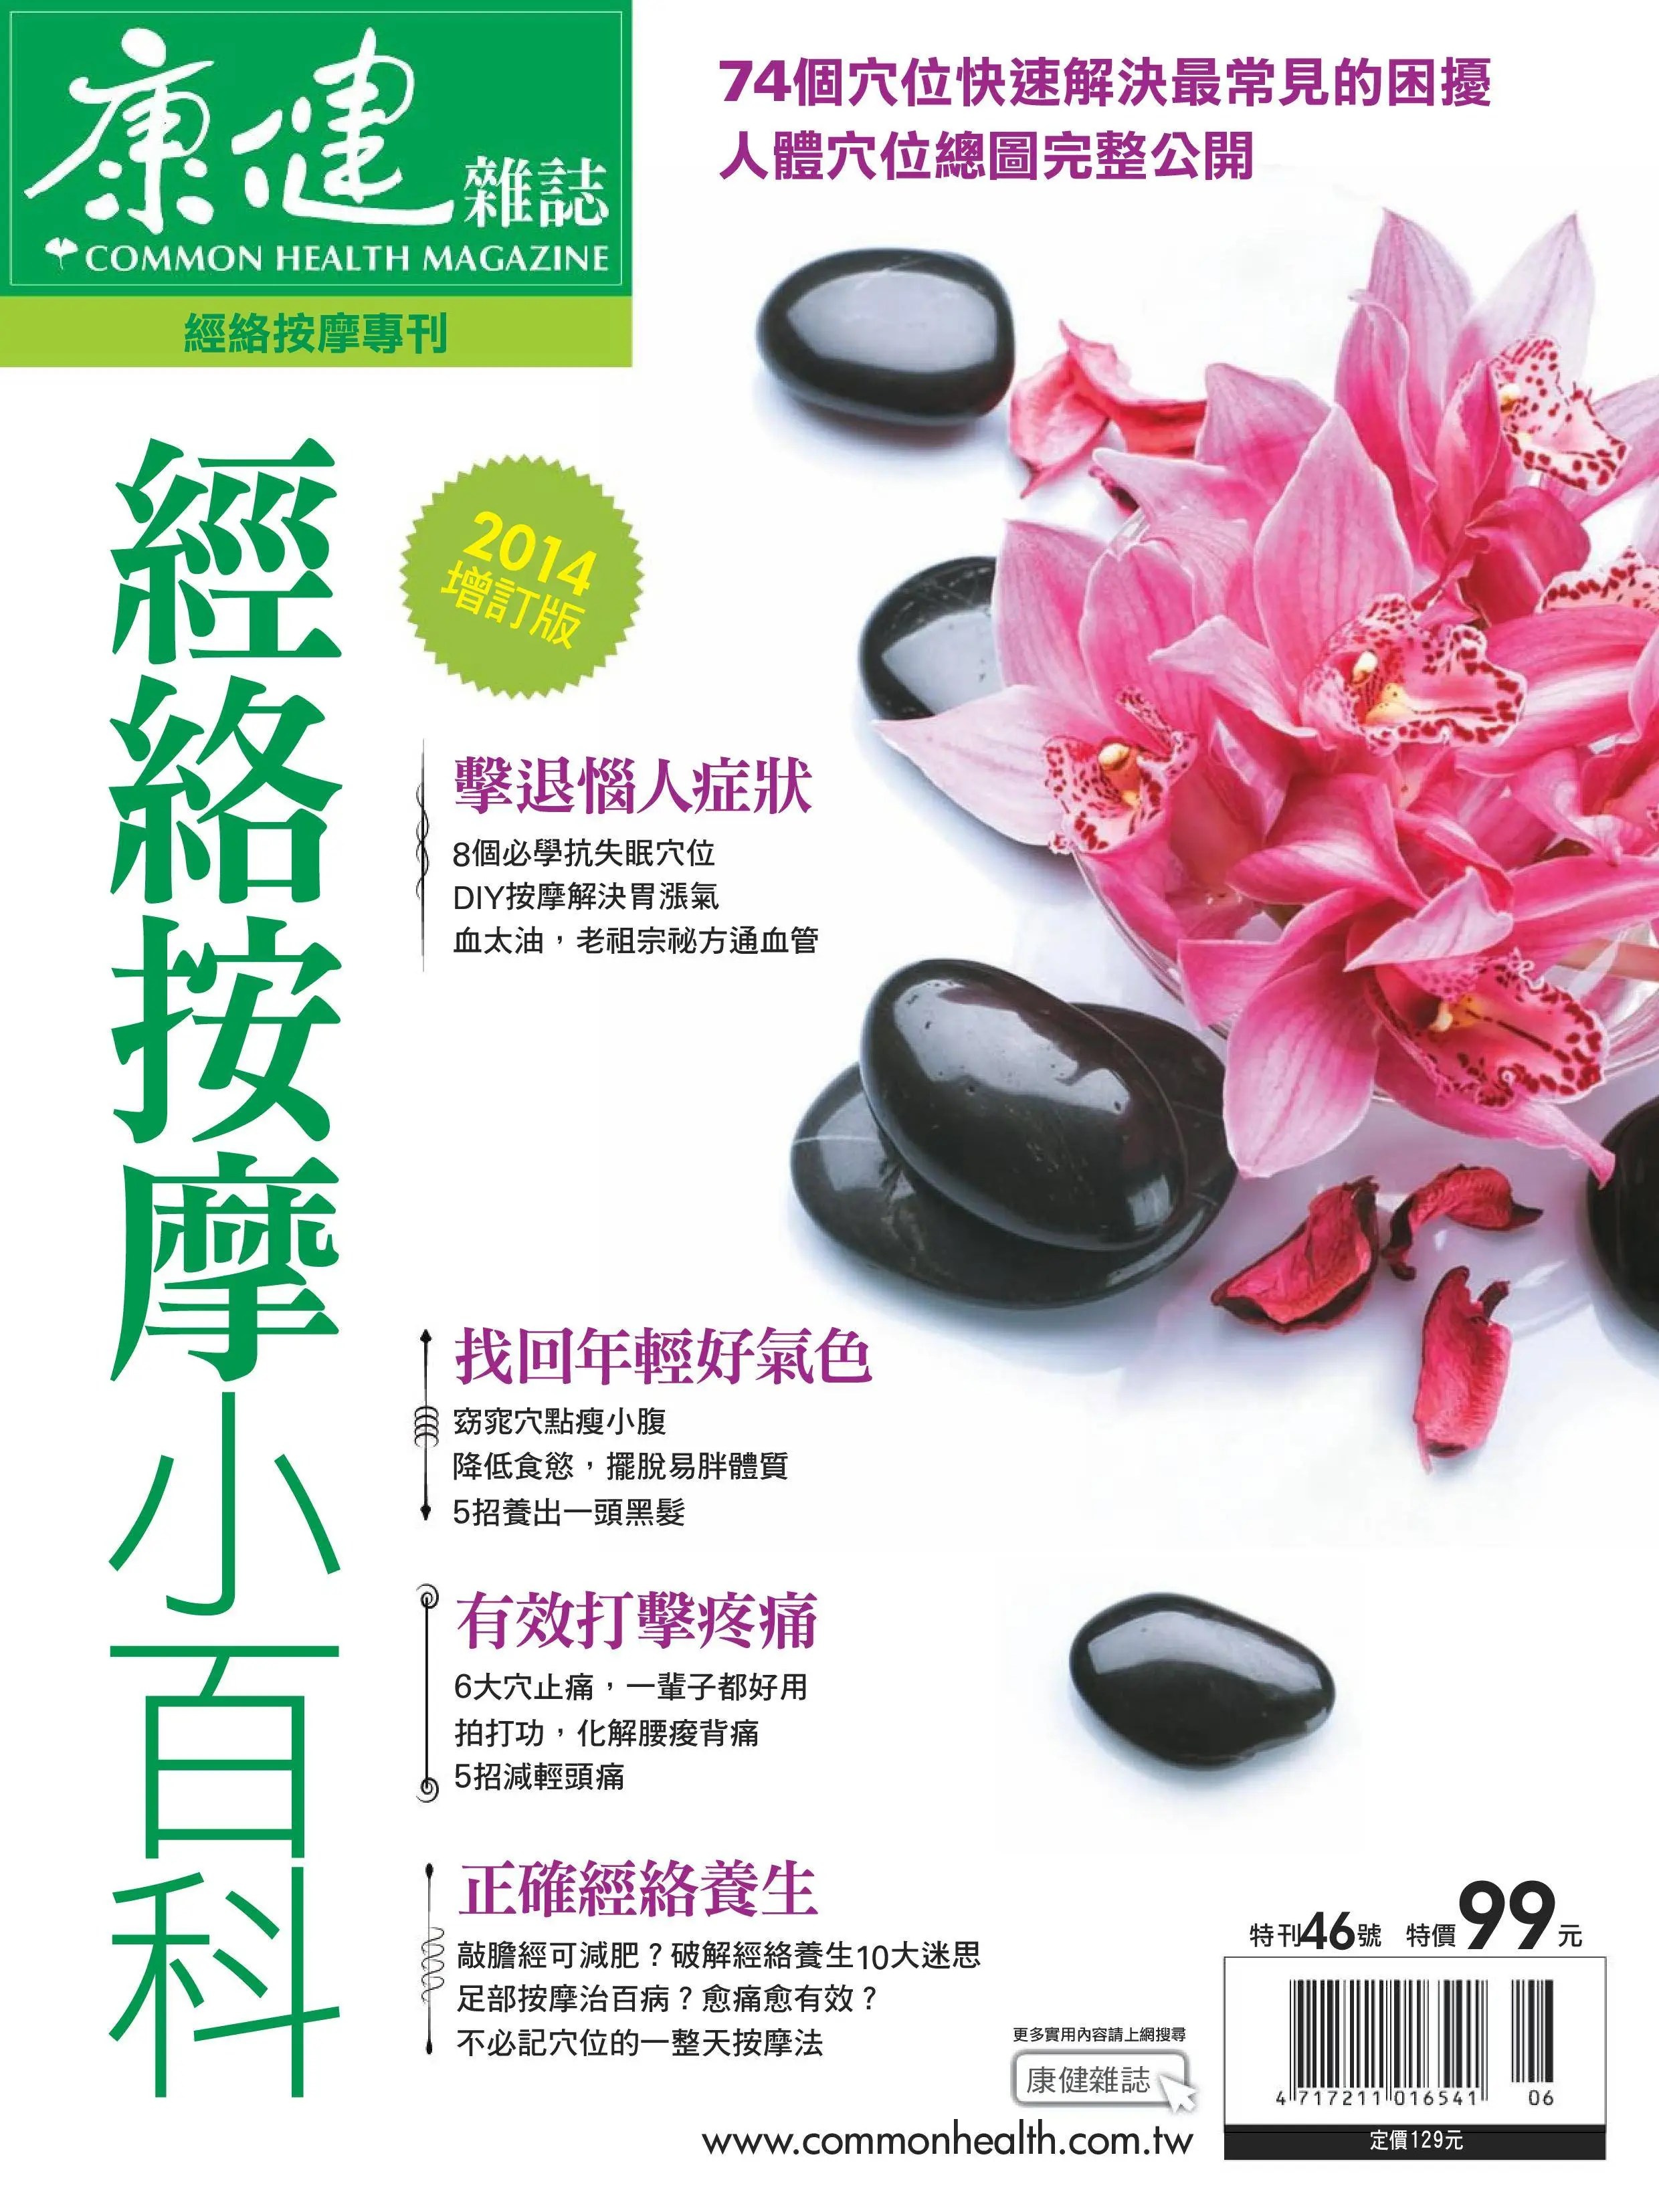 Common Health Special Issue 康健主題專刊 - 七月 01, 2014